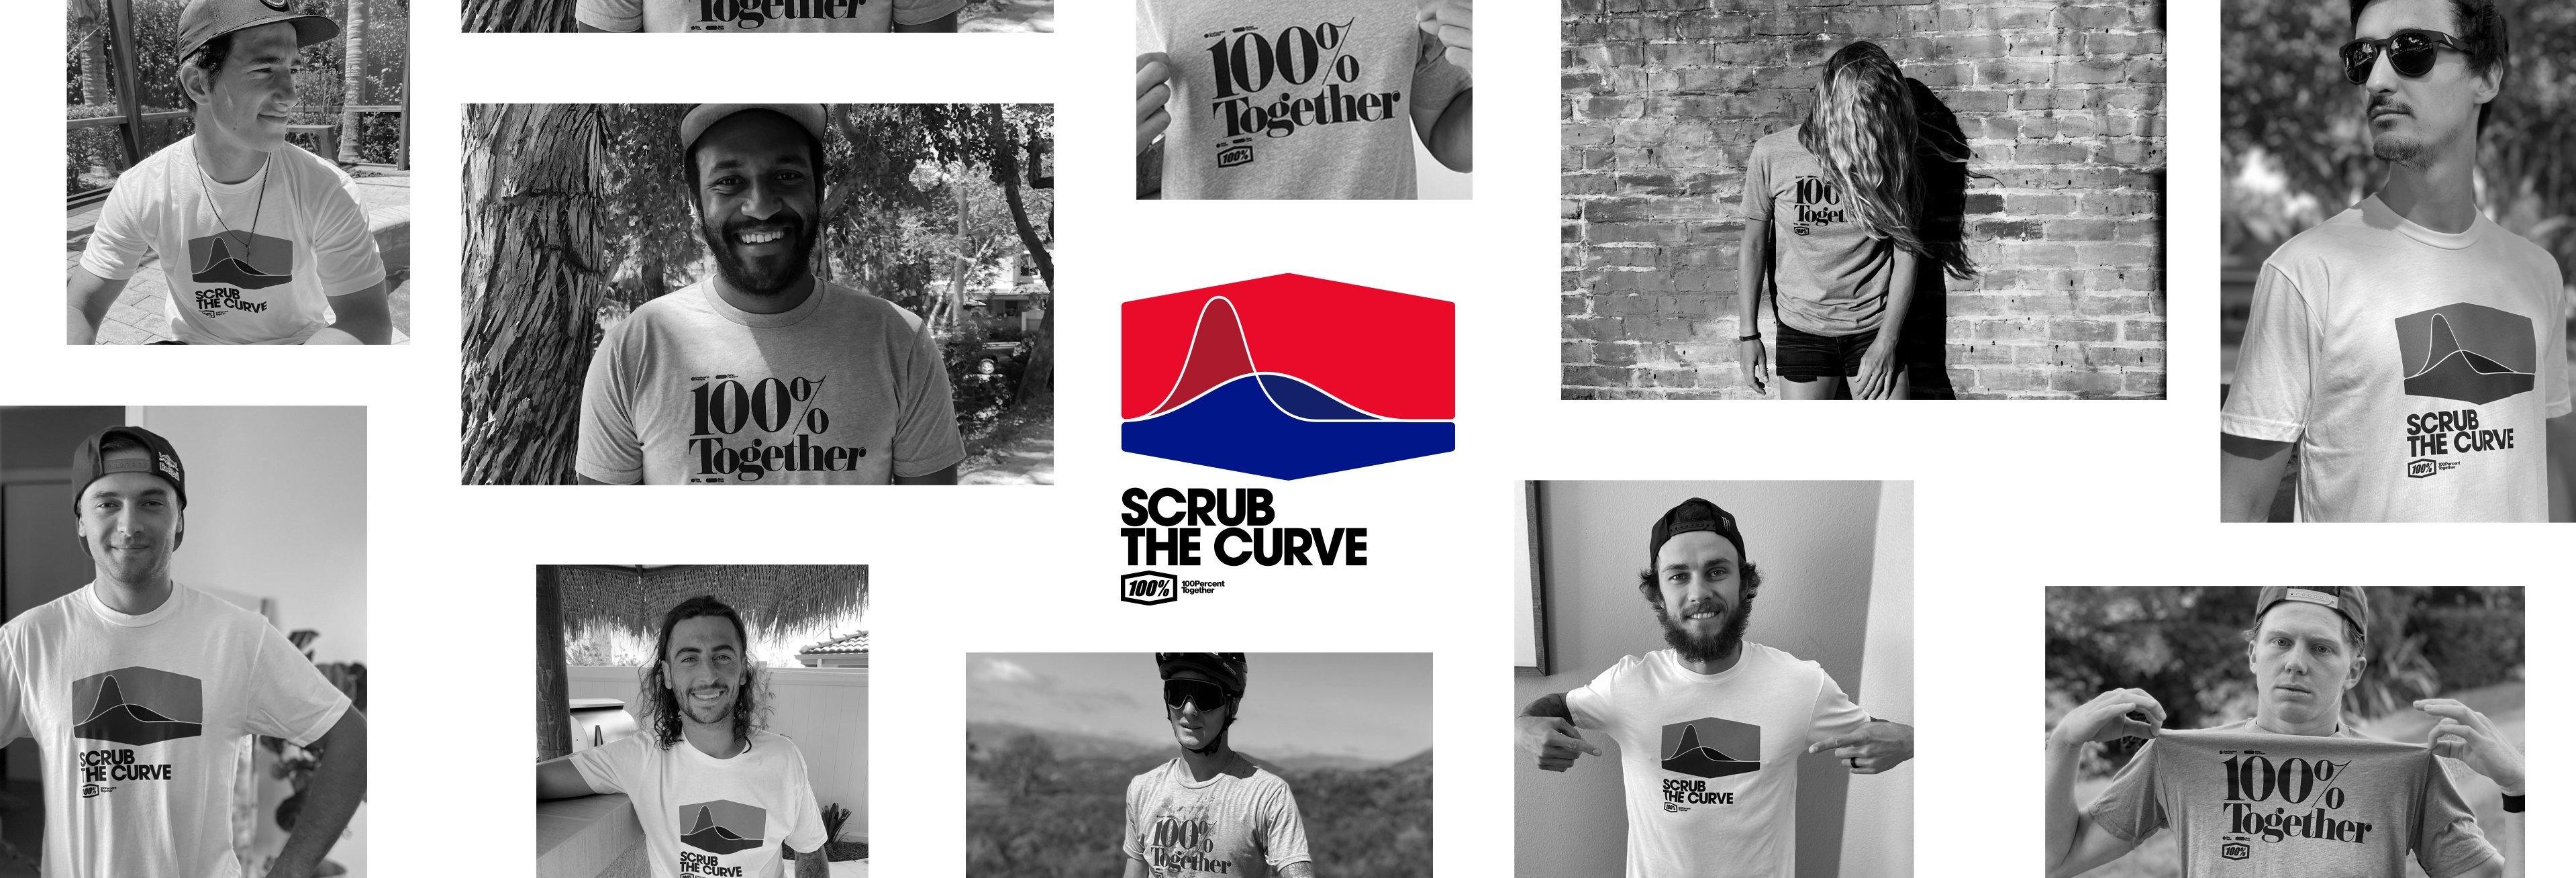 Scrub the Curve - 100% Europe